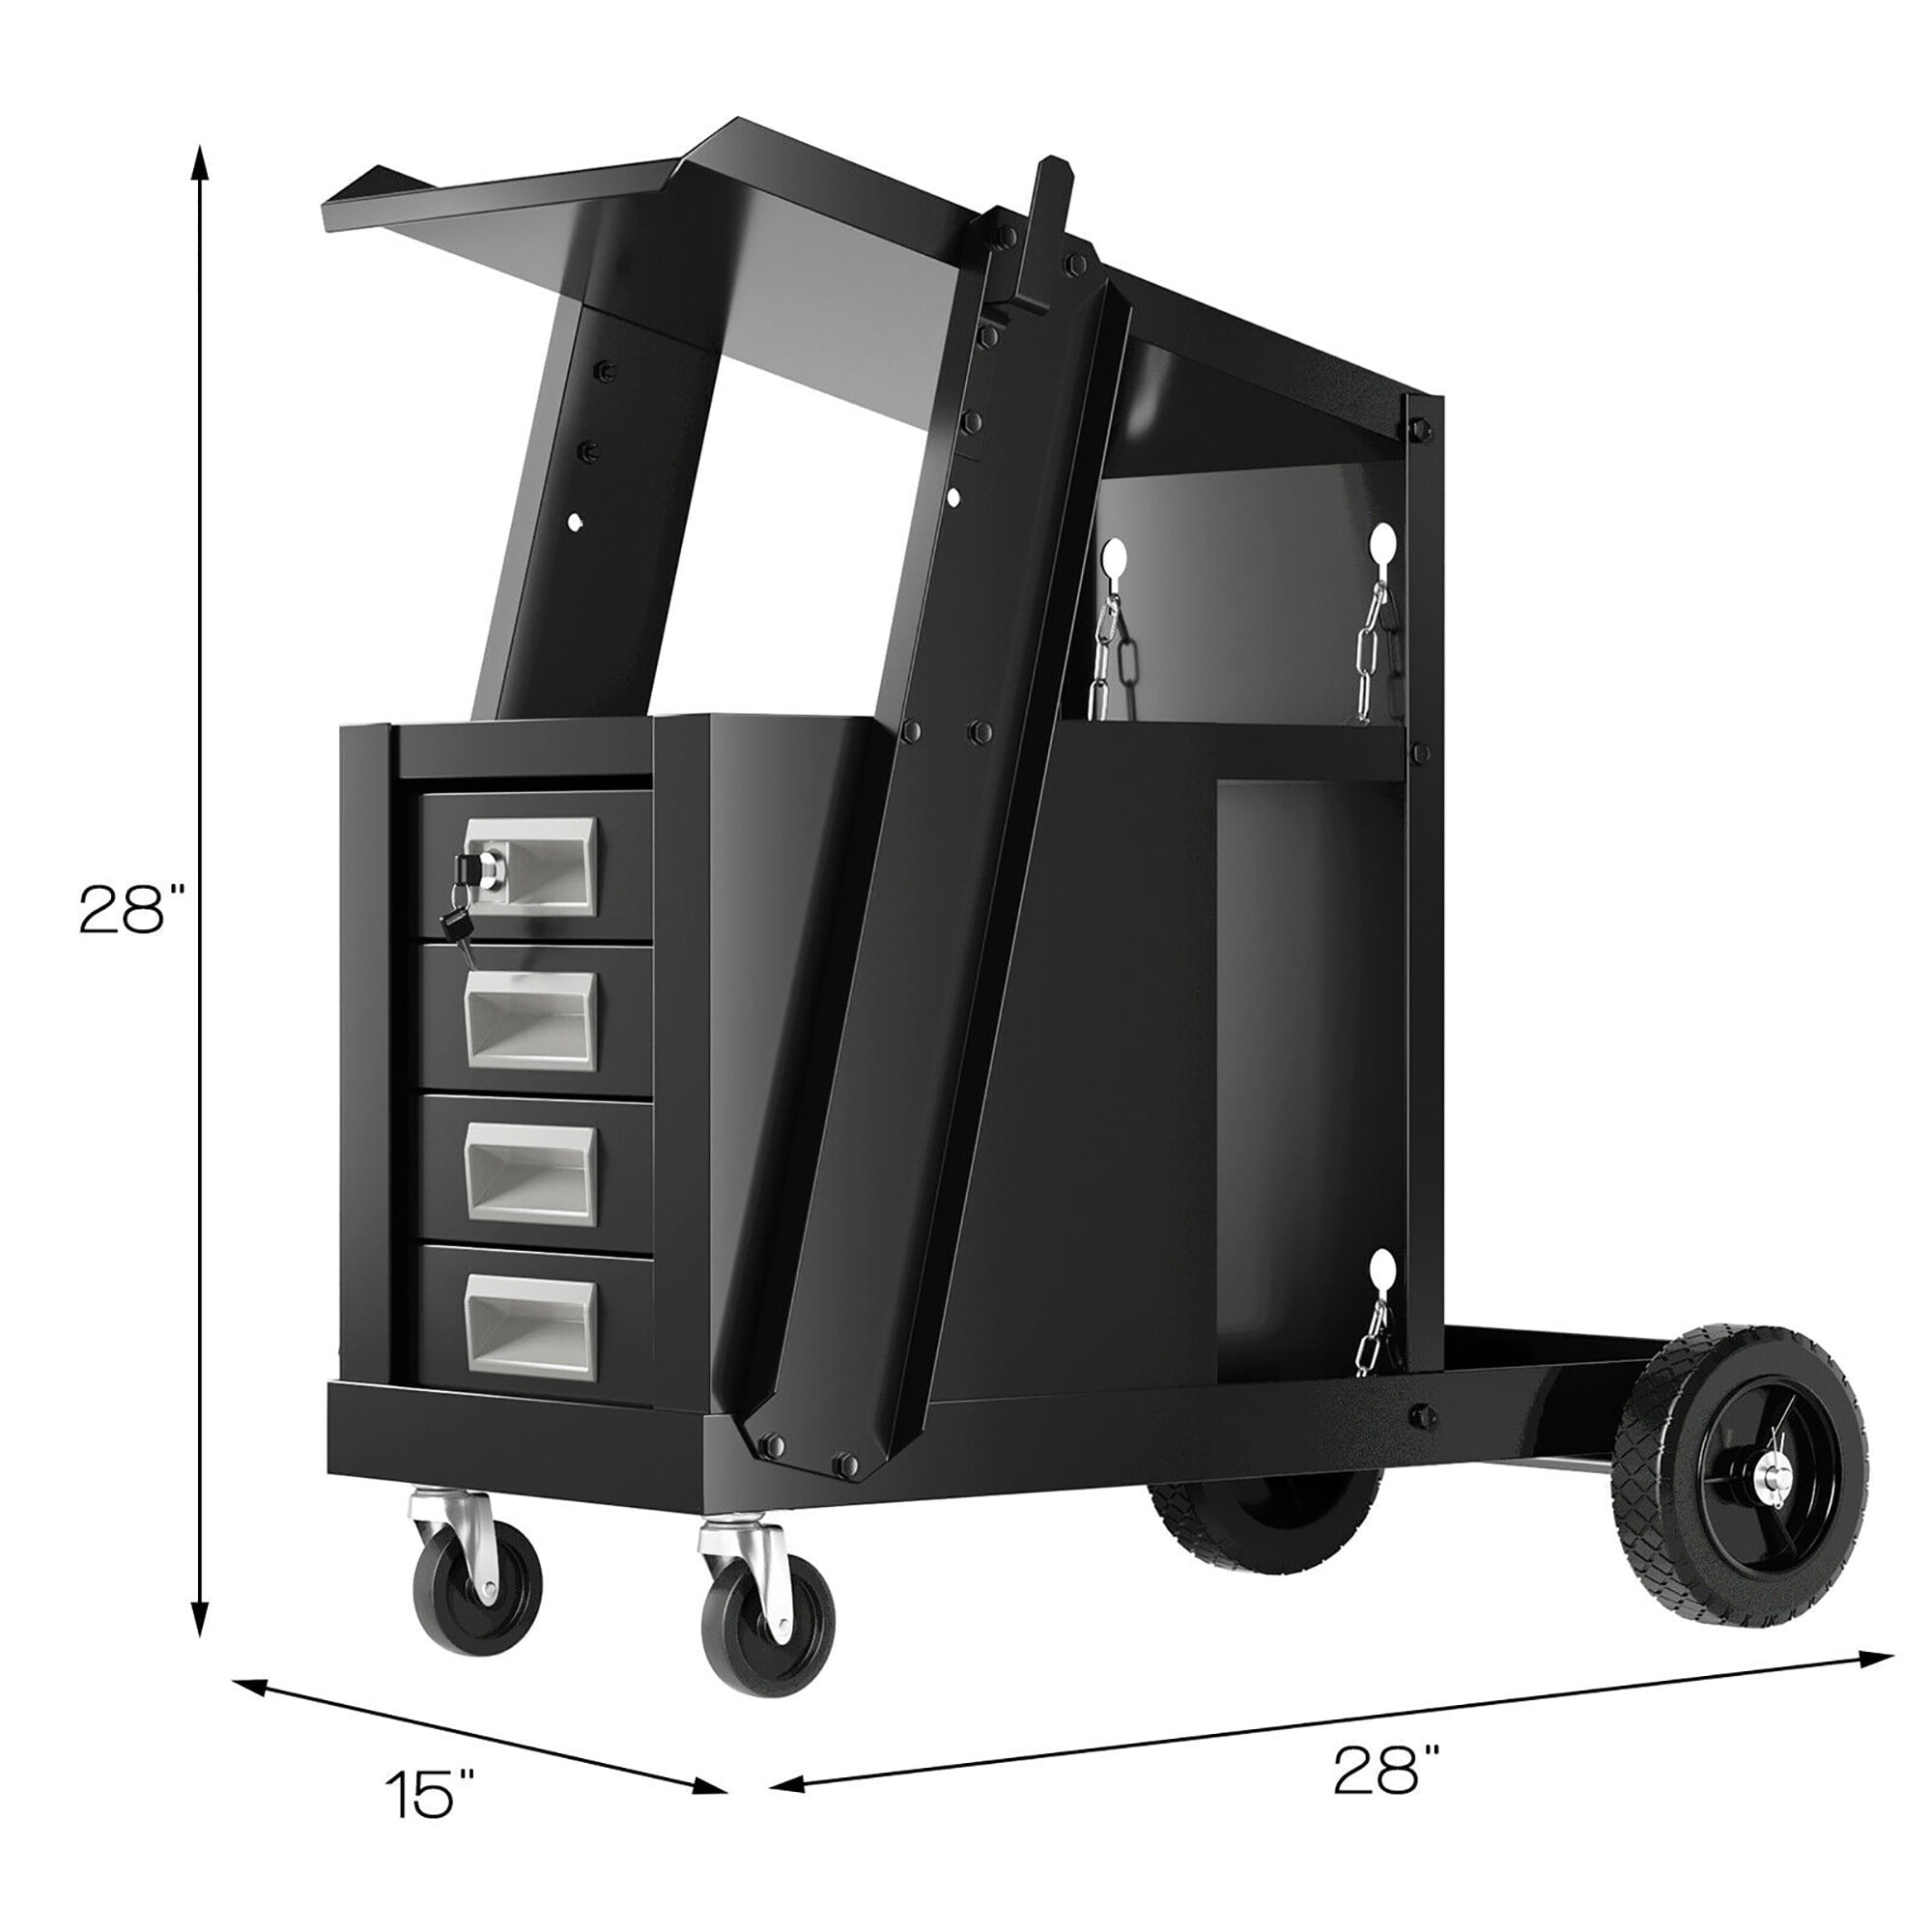 Welding Cart With 4 Drawers Black Tool Storage Steel Organisation Cabinet Wheels 